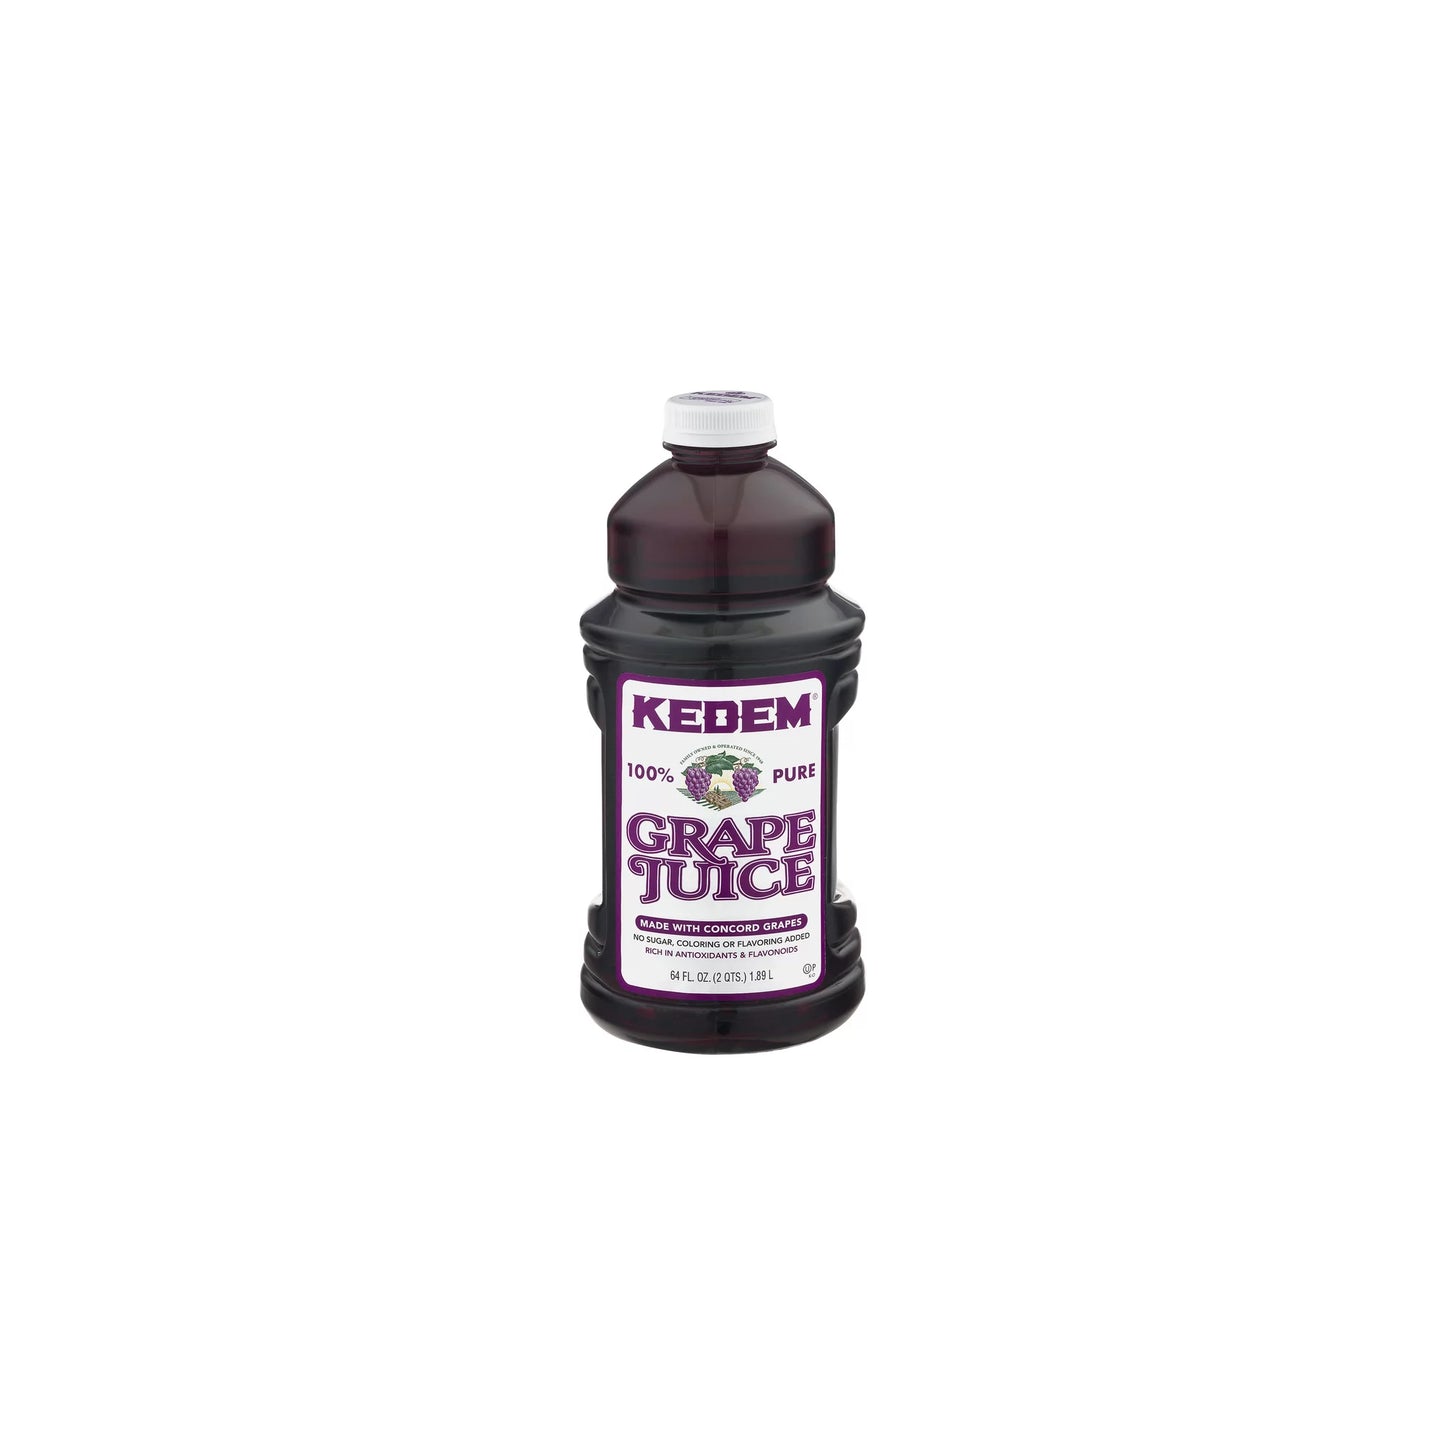 Kedem 100% Juice, Grape, 64 Fl Oz, 1 Count - Kosher - Imported From USA